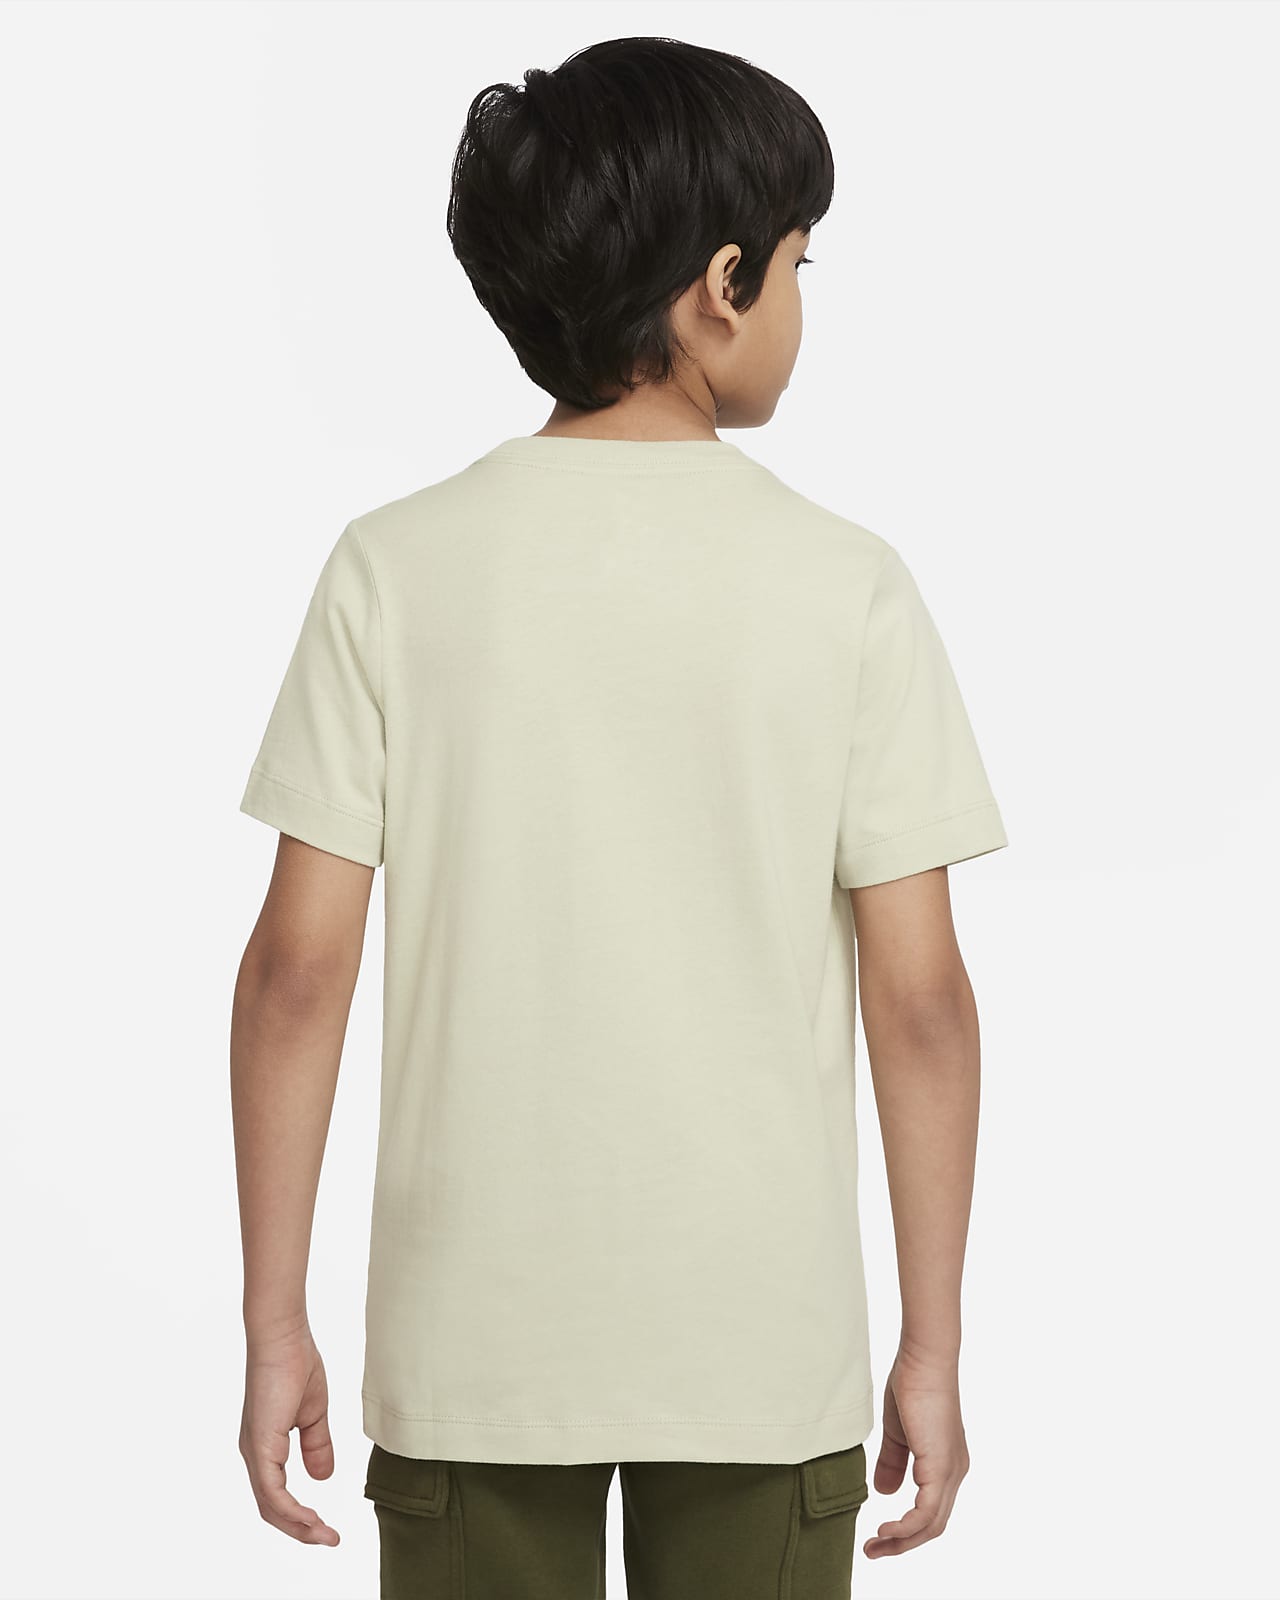 Nike Sportswear Older Kids' (Boys') T-Shirt. Nike NL